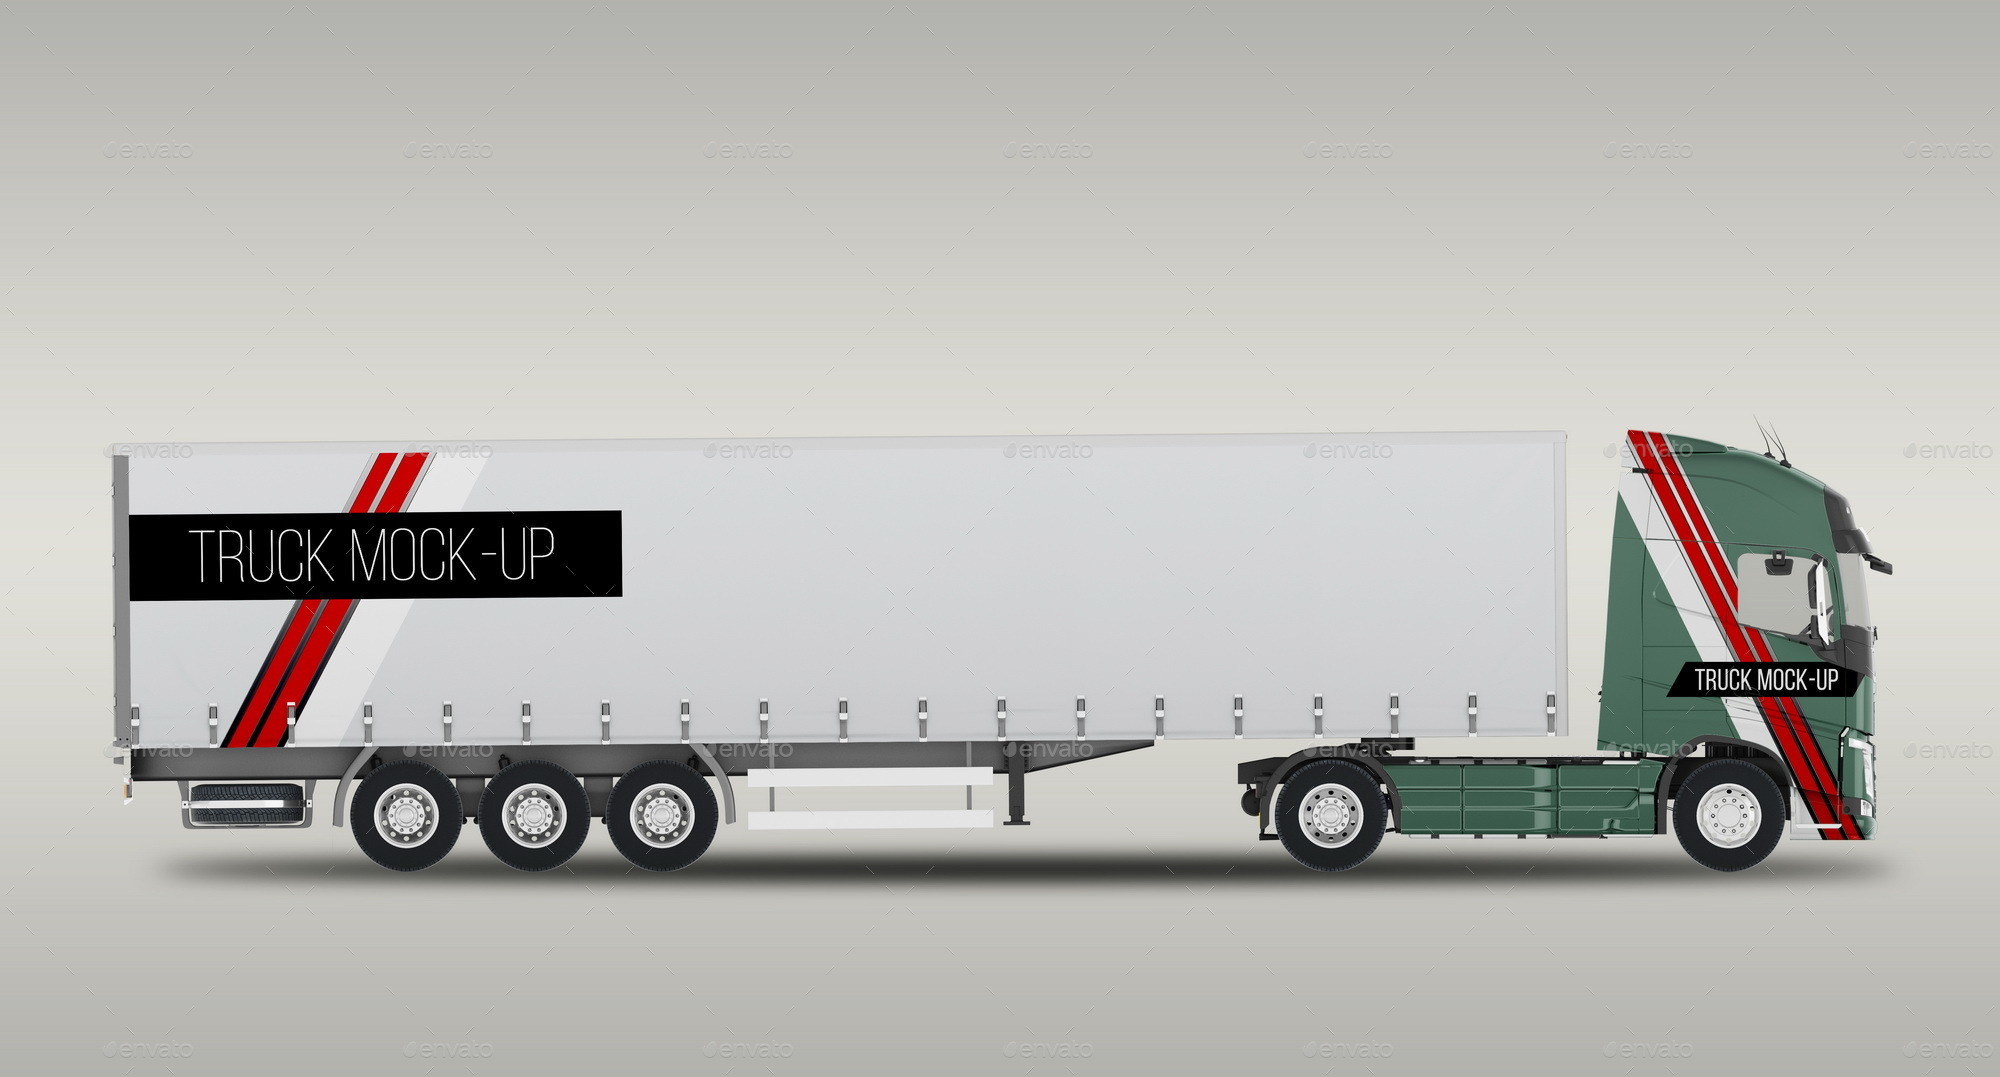 Download Truck Mock-Up by AlexKond | GraphicRiver